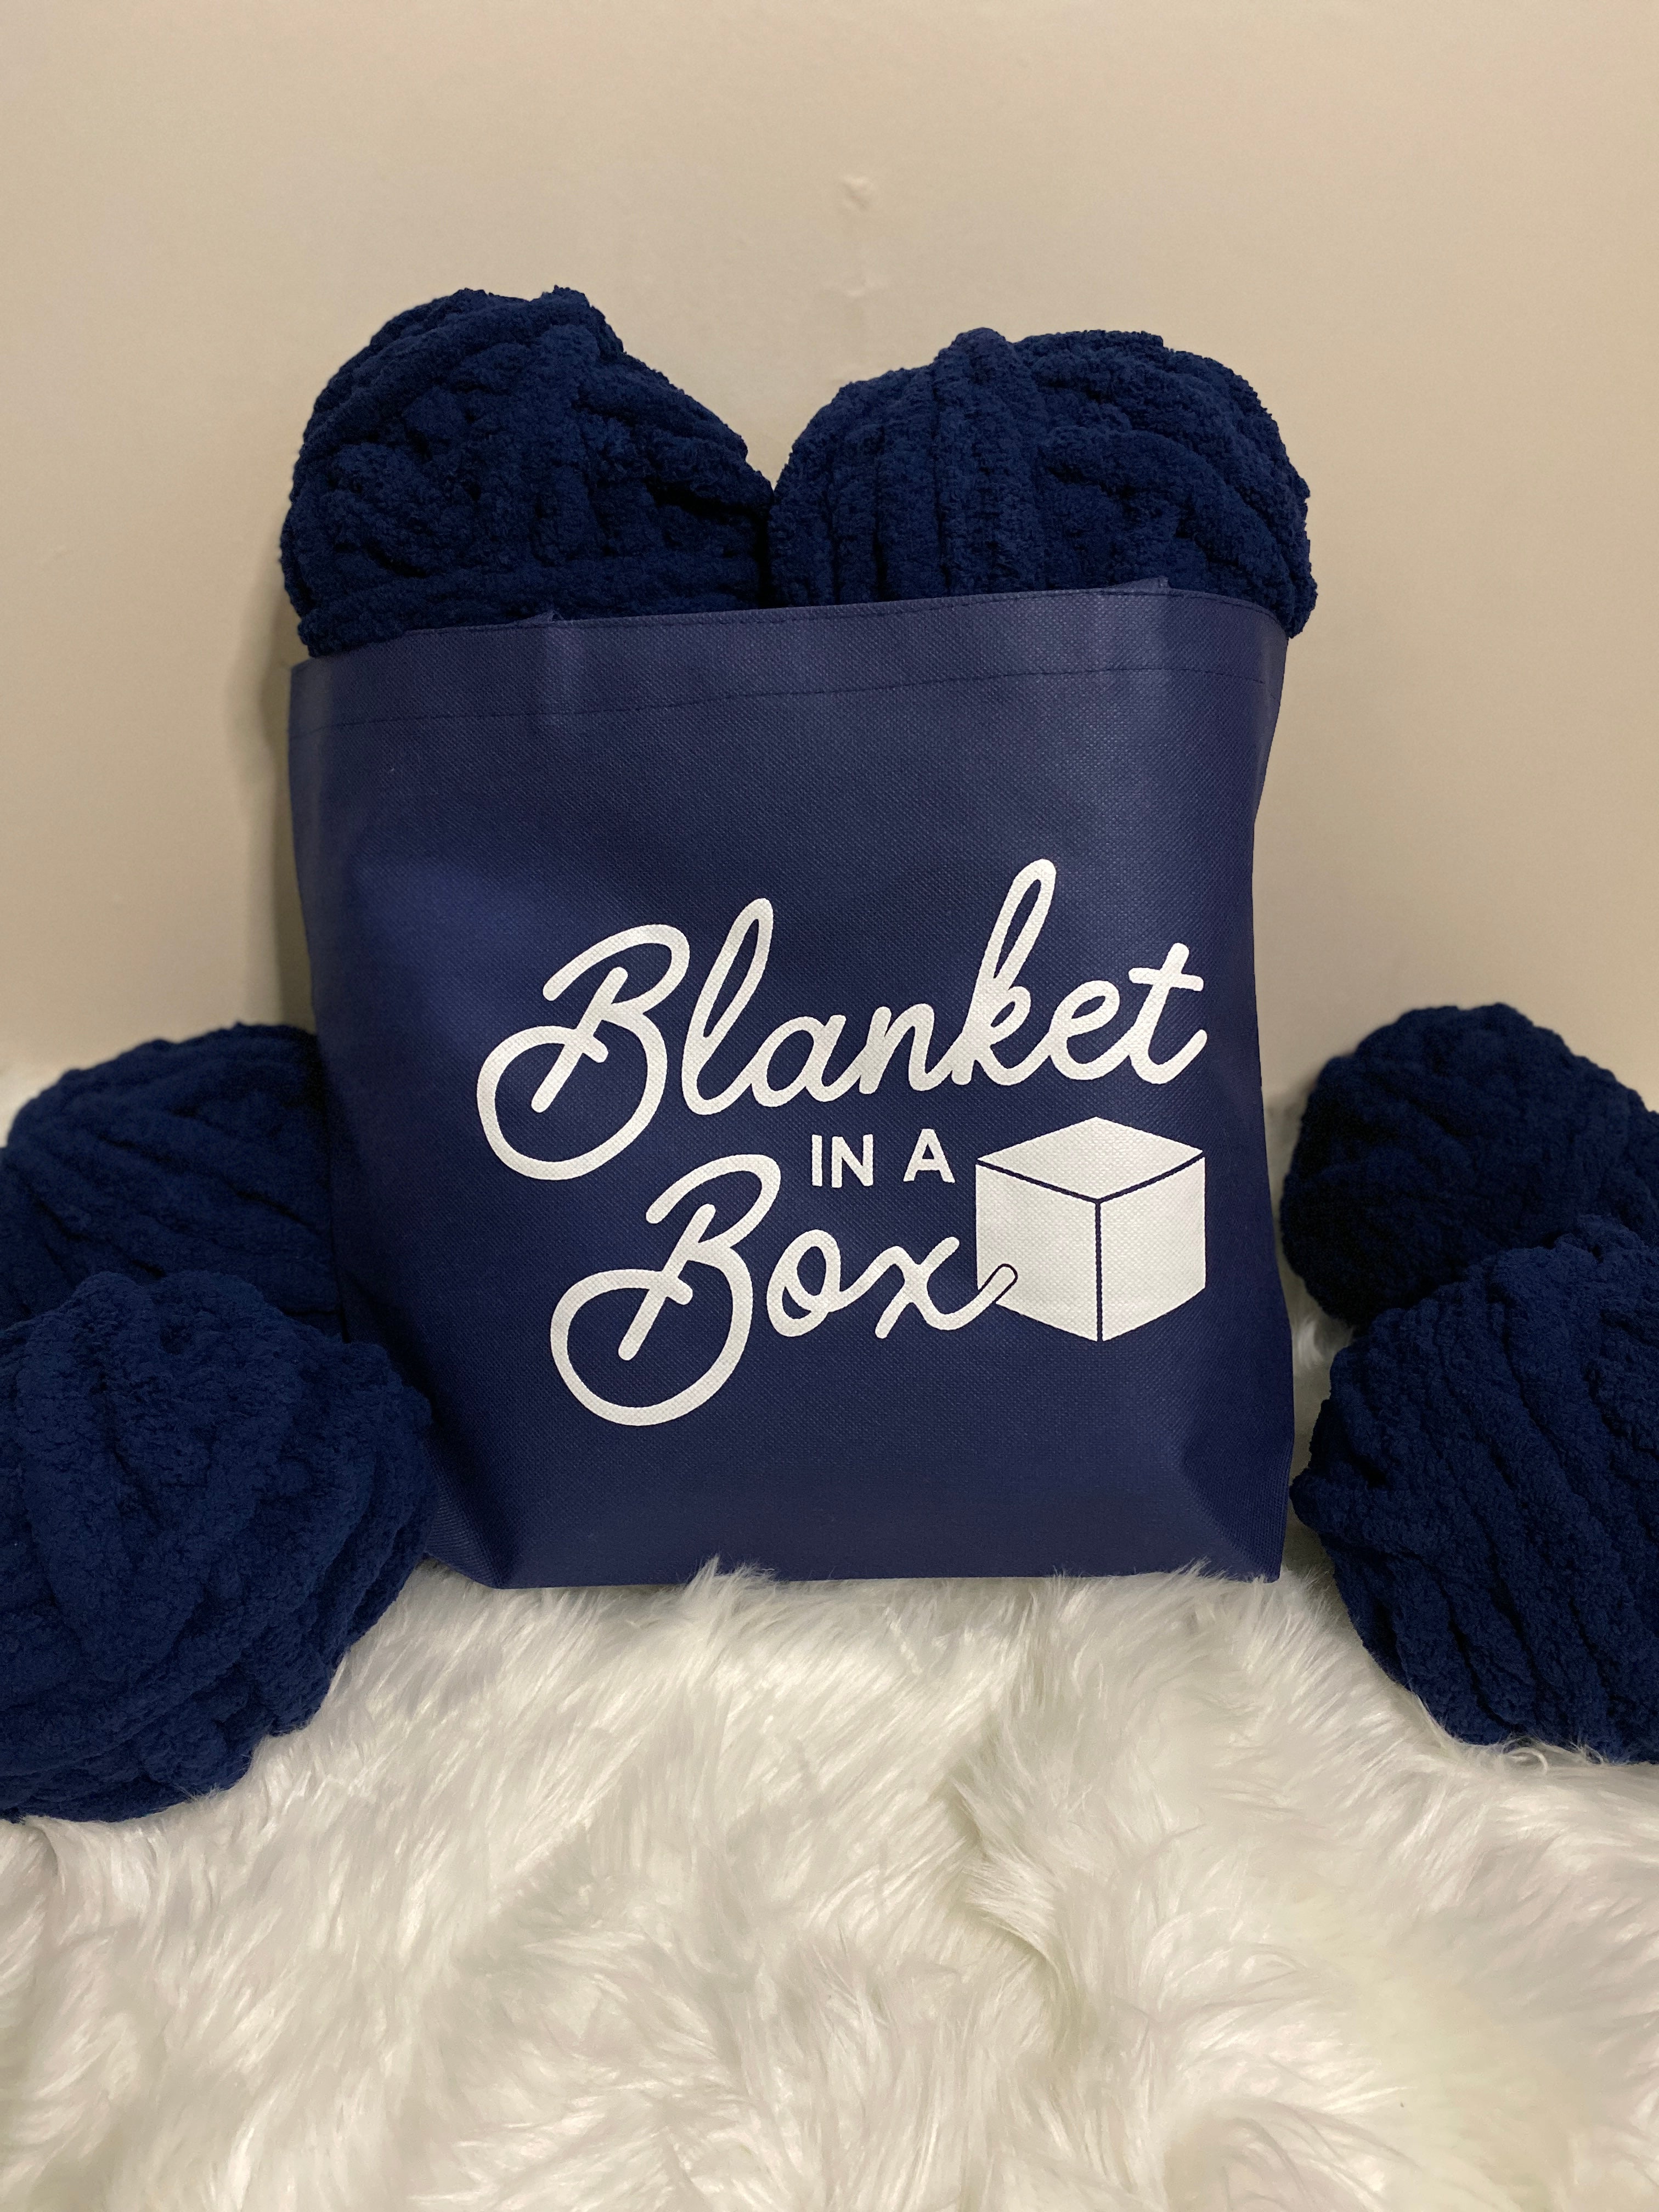 Plymouth Bay Blanket Kit